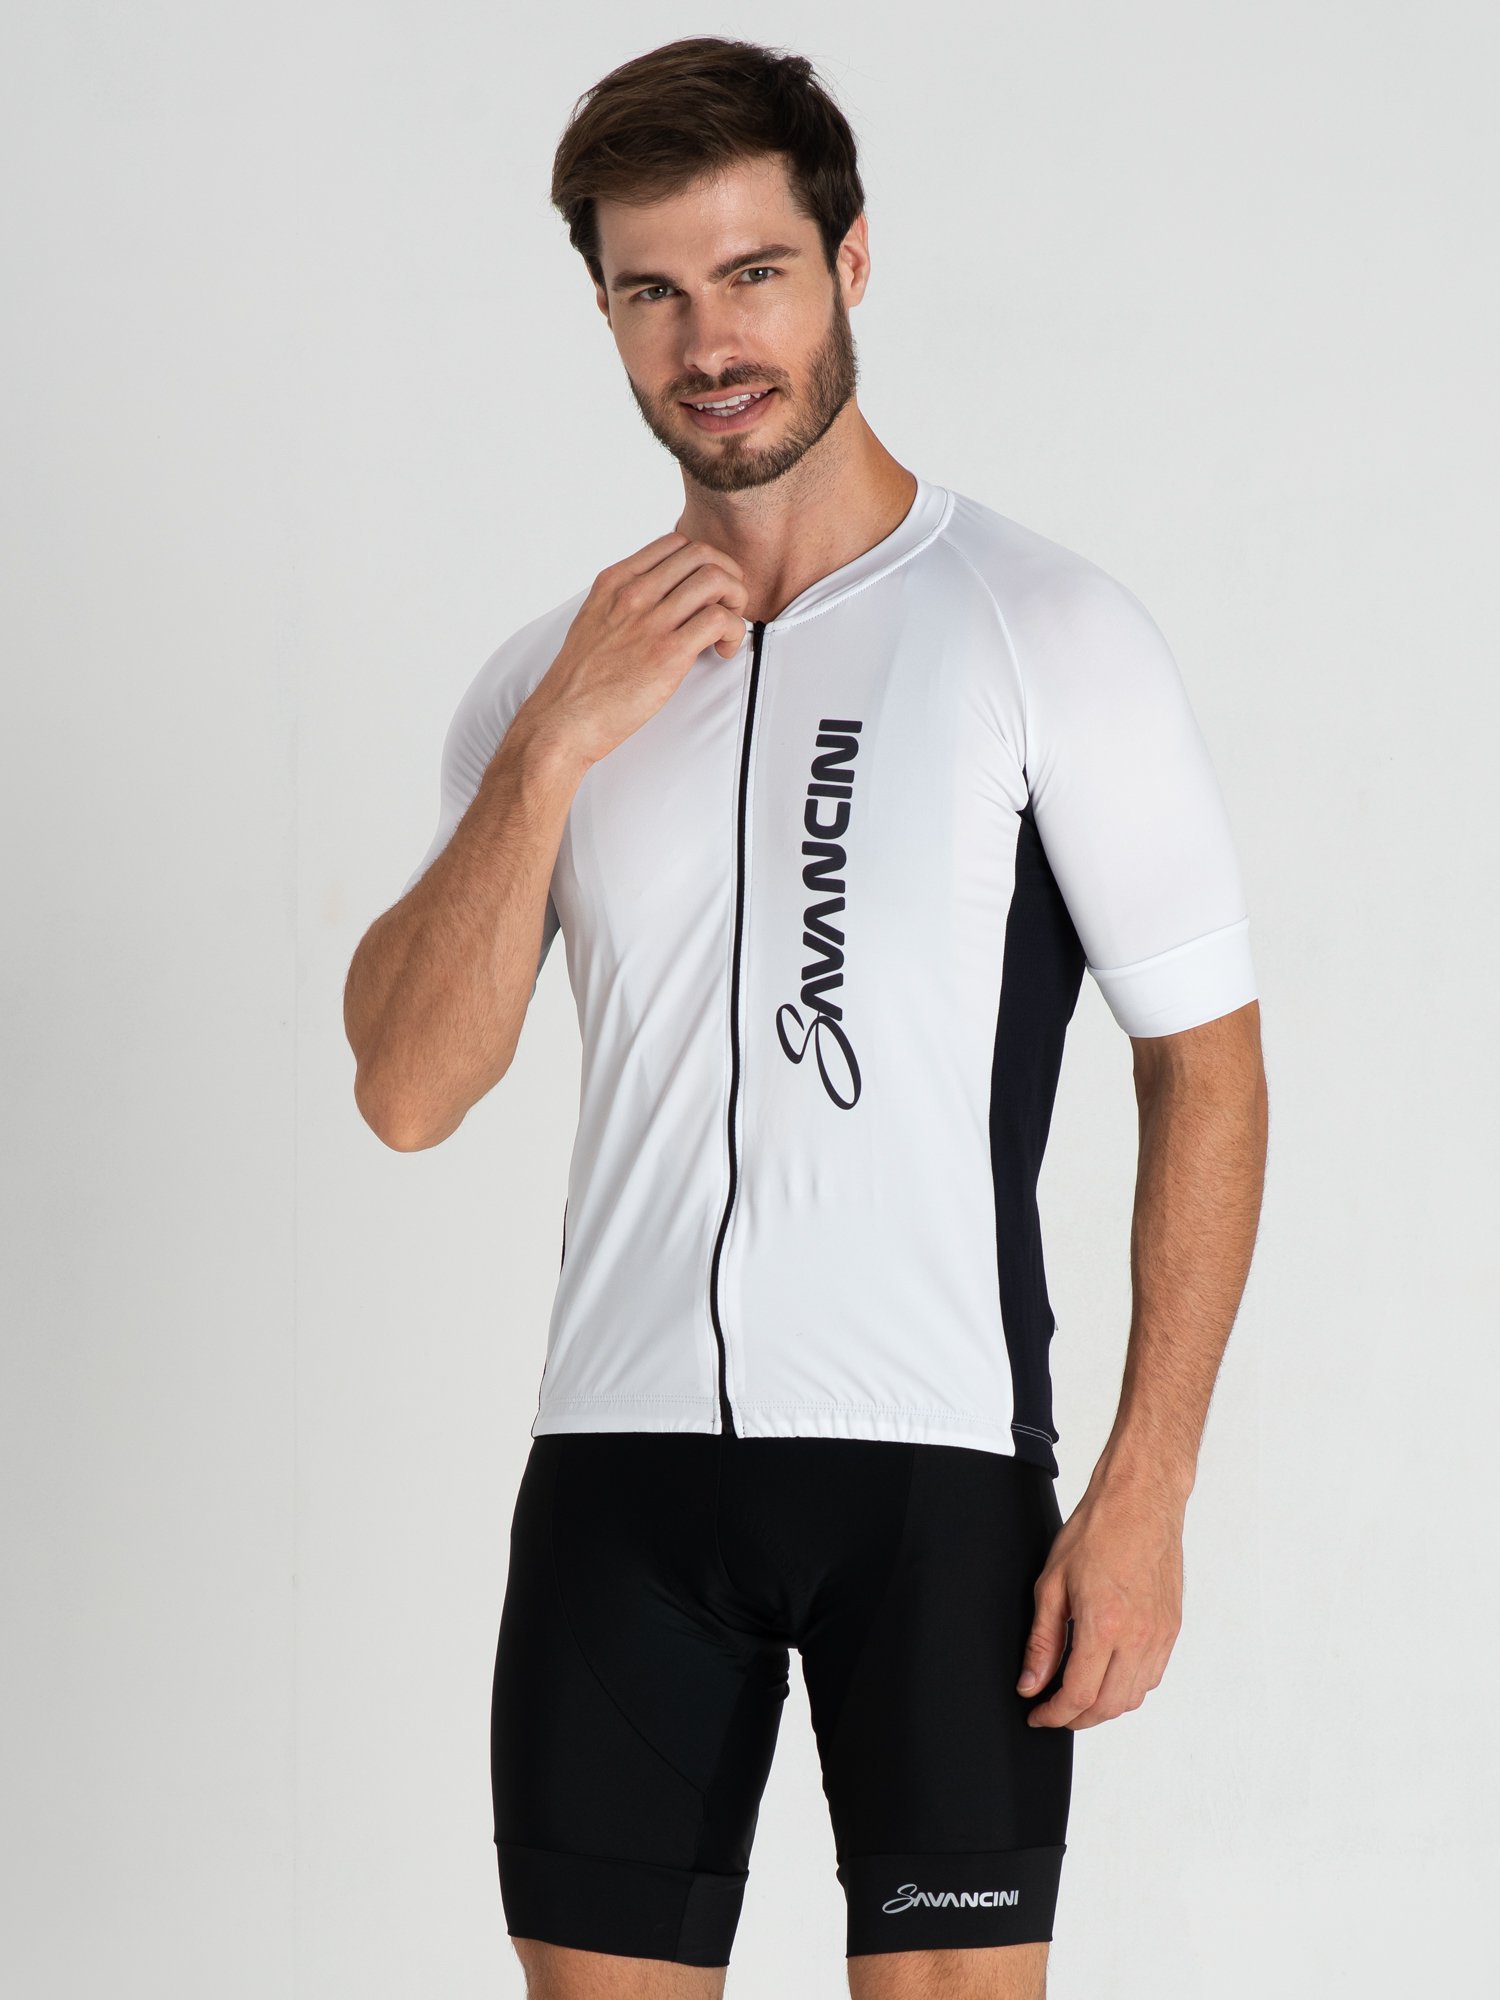 Camisa Segunda Pele Para Ciclismo Masculina Savancini (130)